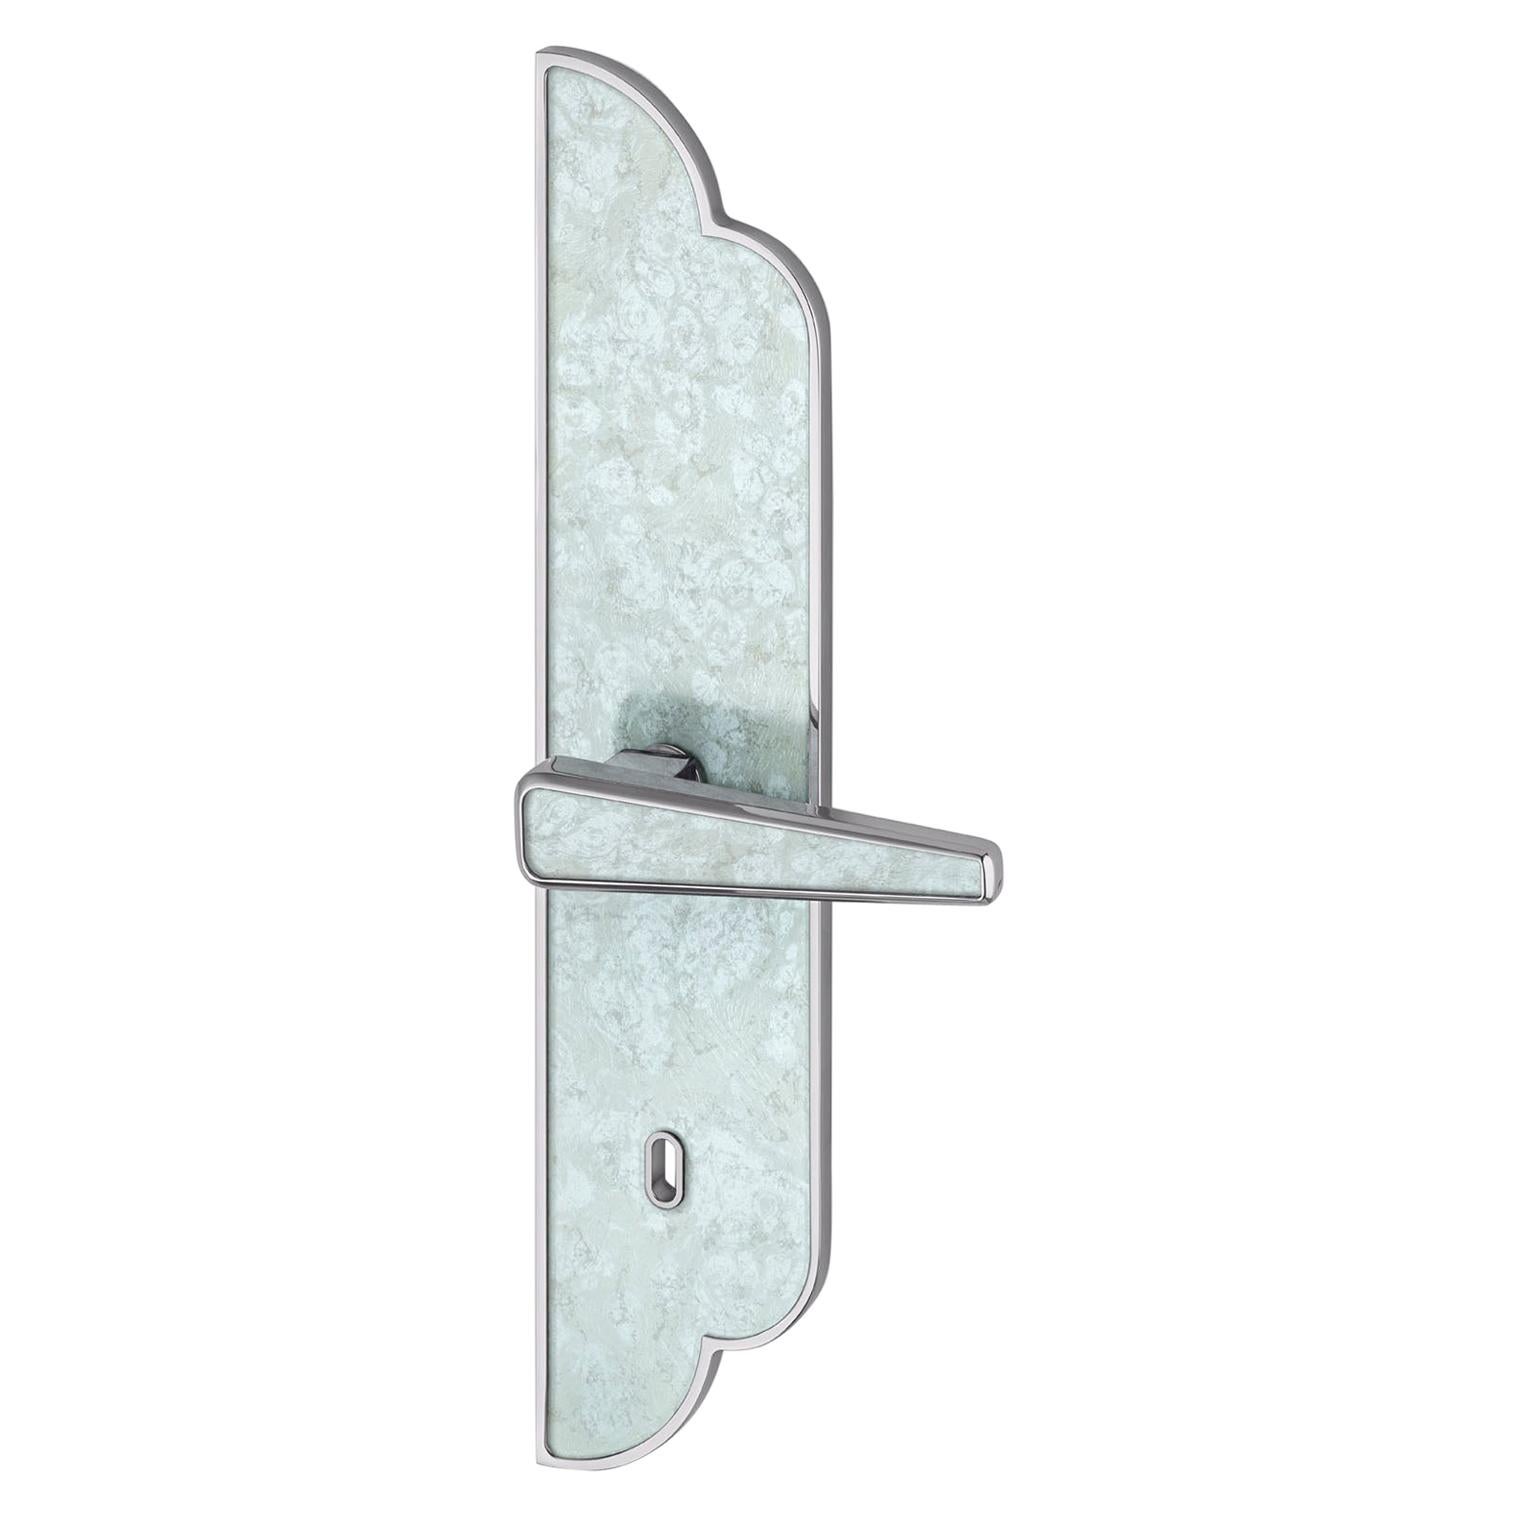 Door Handle Aluminum Plate Brass Handle Body Polished Chrome Vetrite Insert For Sale